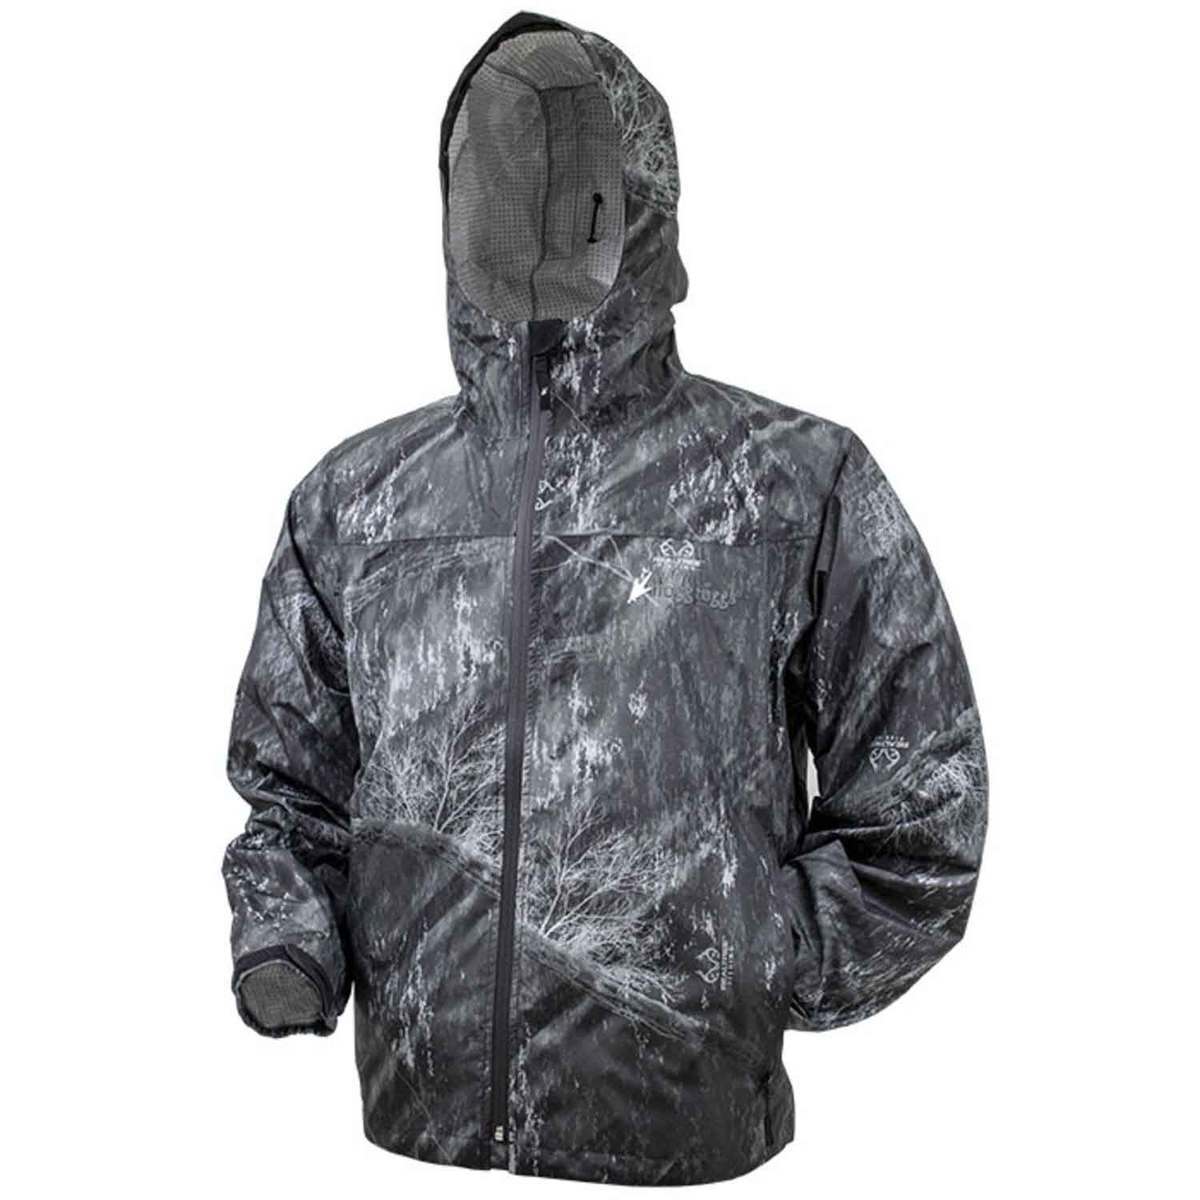 https://www.sportsmans.com/medias/frogg-toggs-mens-java-toadz-25-waterproof-packable-rain-jacket-realtree-fishing-black-m-1539120-1.jpg?context=bWFzdGVyfGltYWdlc3w5NjgyN3xpbWFnZS9qcGVnfGFXMWhaMlZ6TDJobU9TOW9PREF2T1Rjek9EWTNNak0zTXpjNU1DNXFjR2N8M2RhMTMwNGMwMzg0NGI3MWFkZTFlZmQ1MDljZWJmNjYxZDRkNjZjM2Y2OTI0OTJmN2EyMTBiNWE4ZDBjMzJiMw